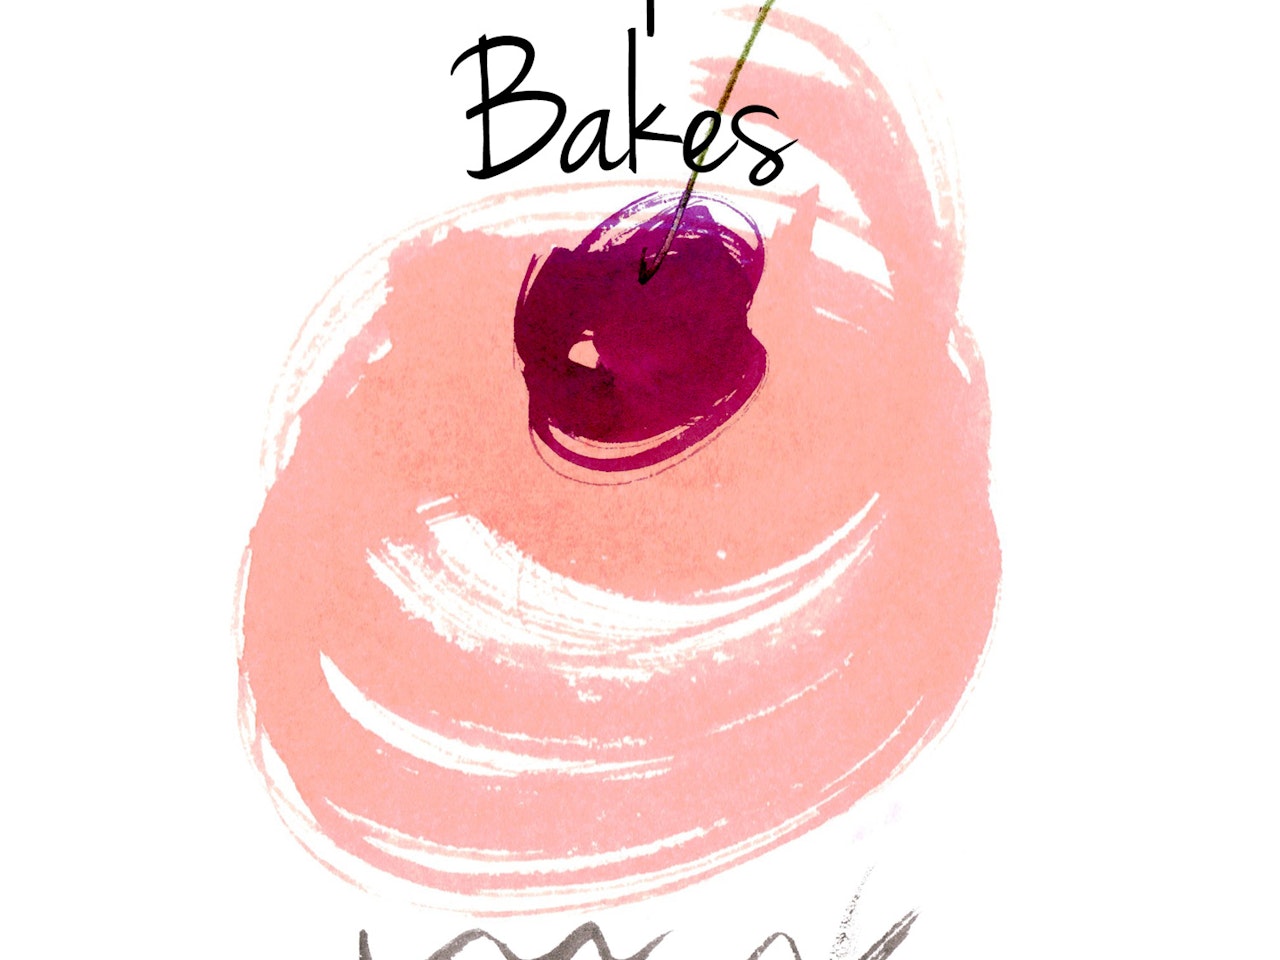 Scrumptious Bakes logo